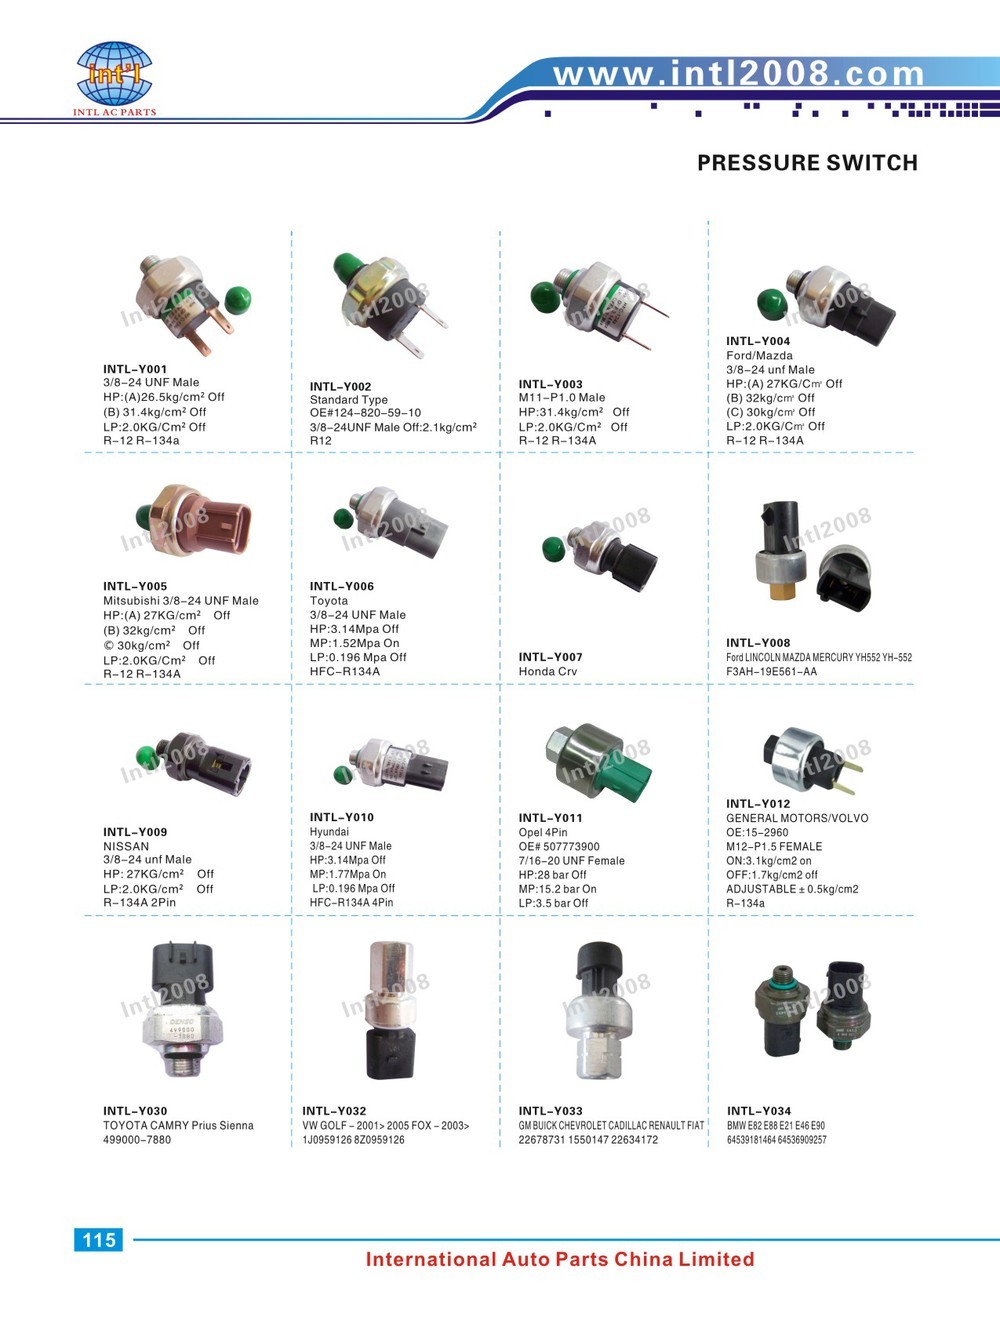 Pressure Switches M10-1.25 FEMALE A/C Pressure Sensor Air Conditioning Transducer Switch